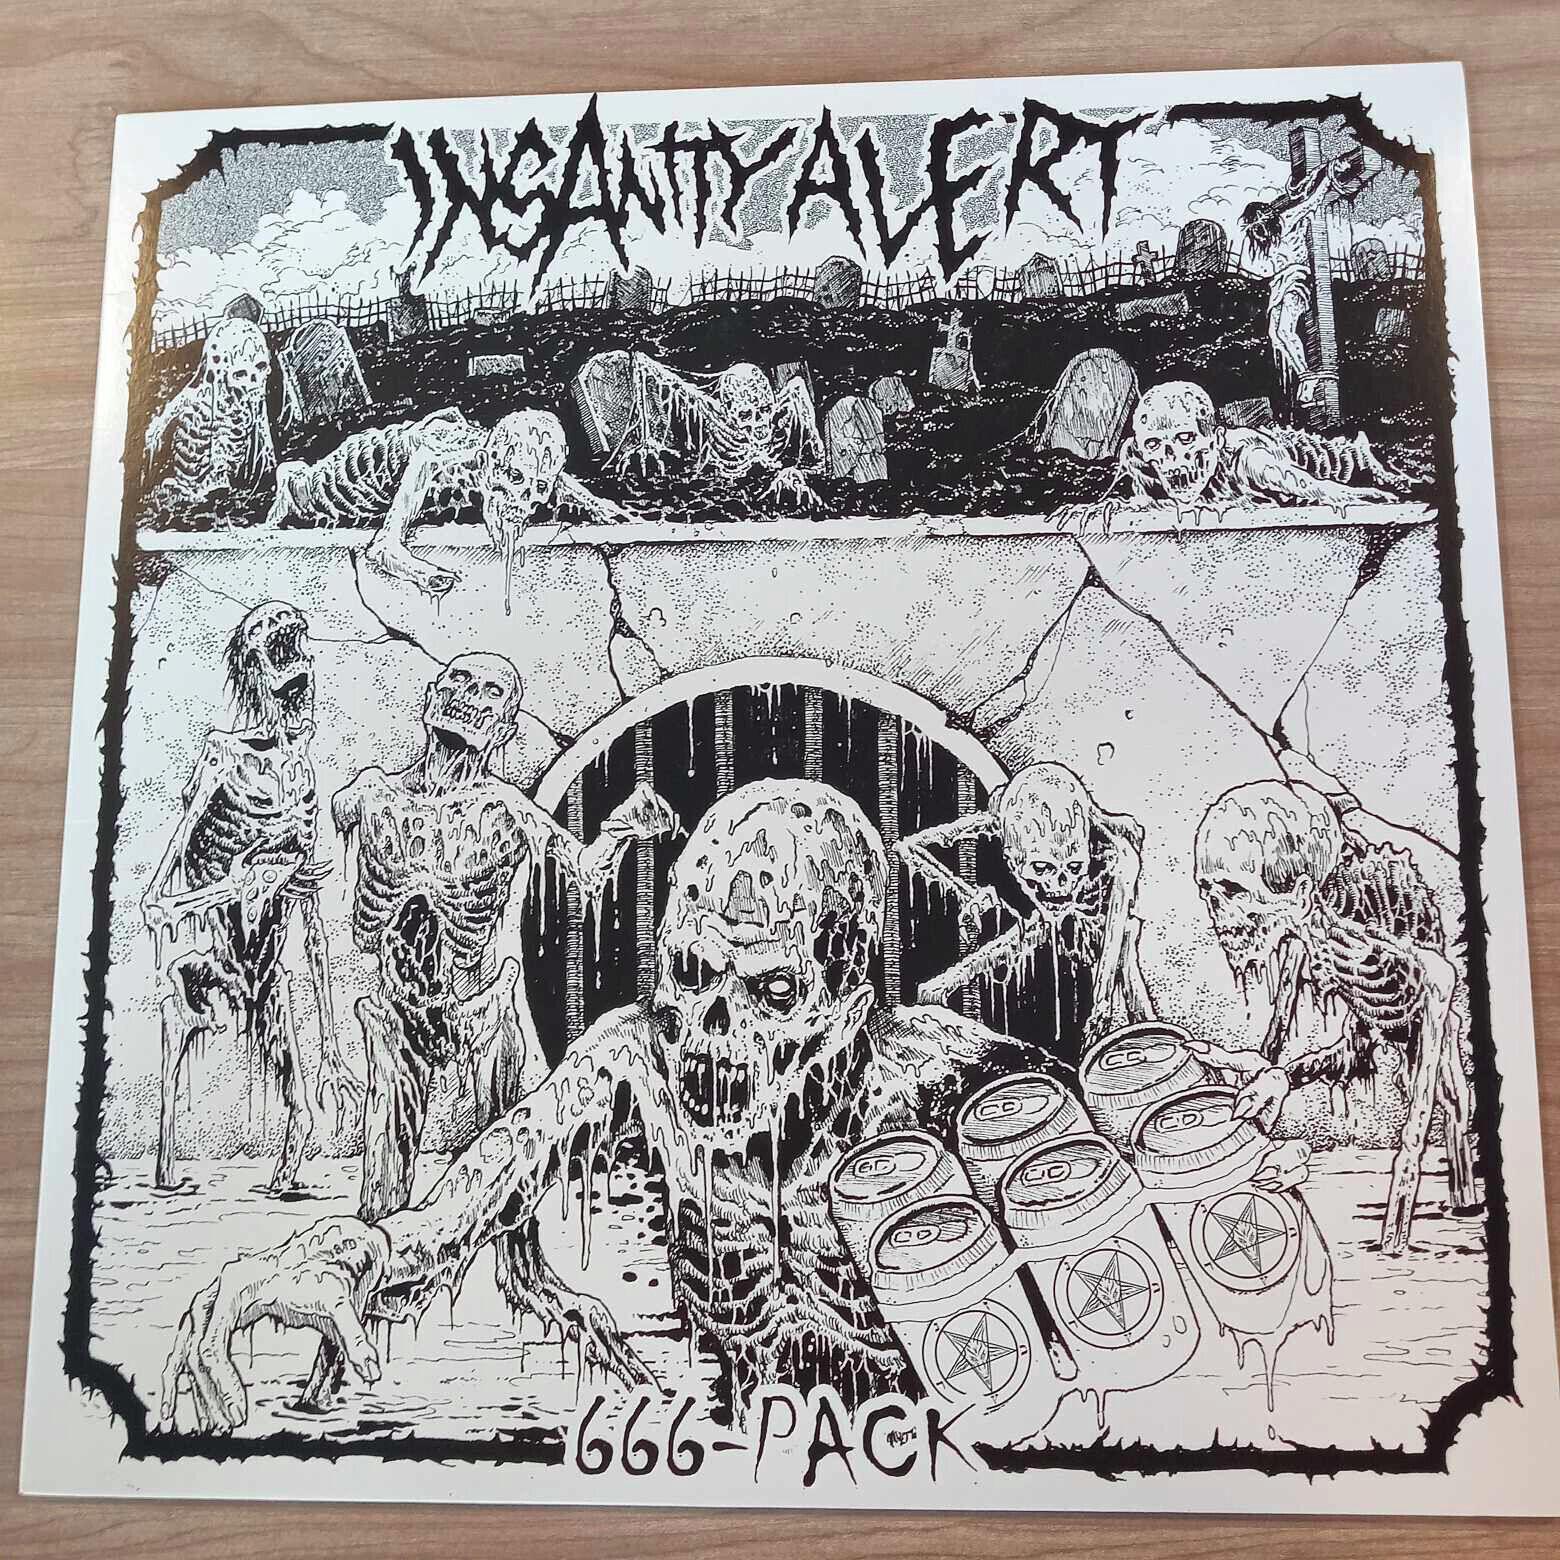 Insanity Alert - 666 - Pack (Season Of Mist) 12" Ltd Ed Clear Vinyl LP